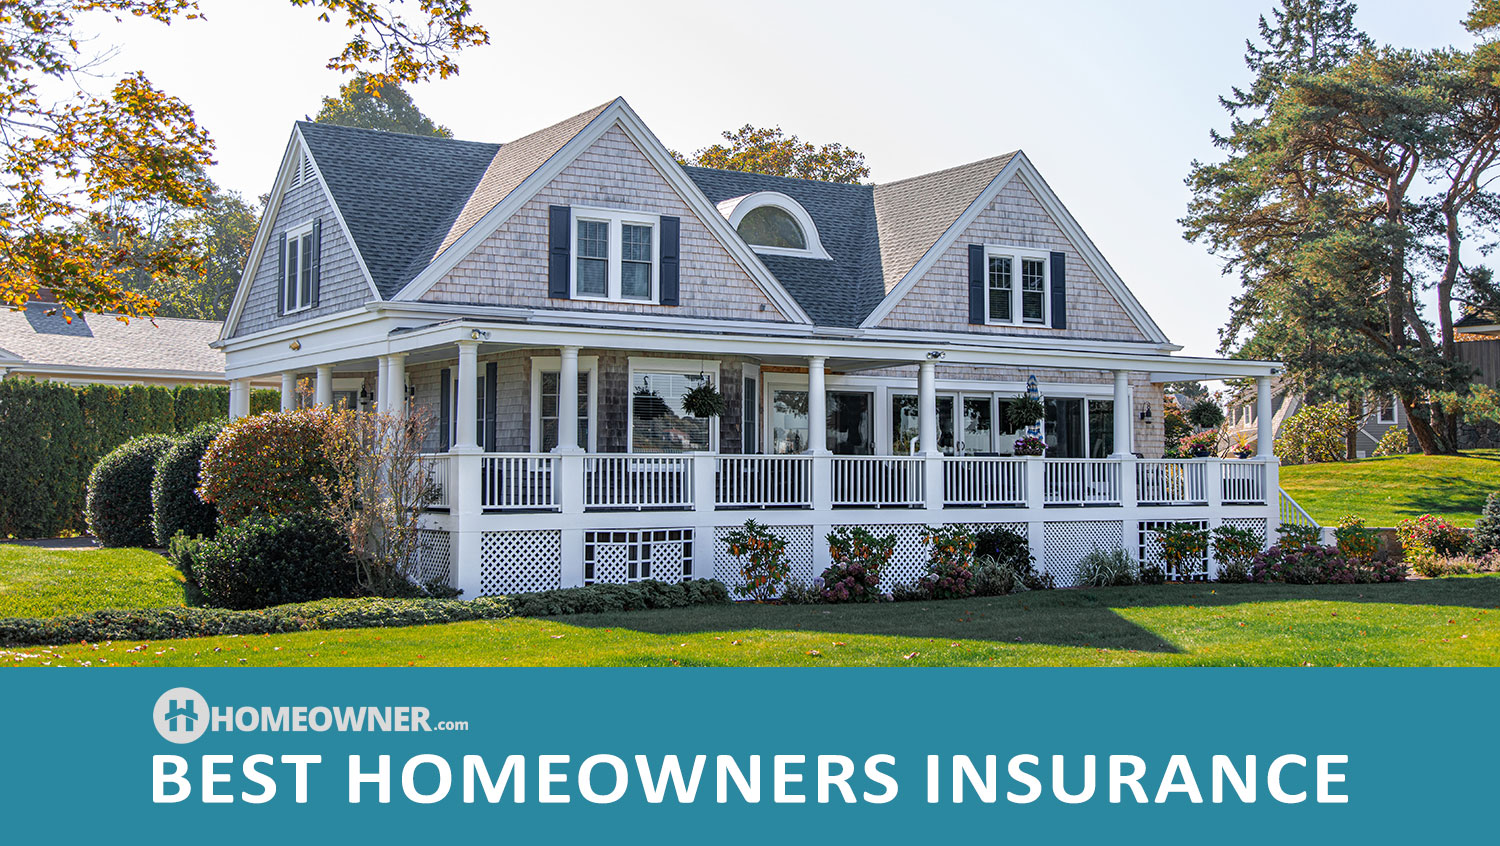 47 Homeowners Insurance Companies in USA